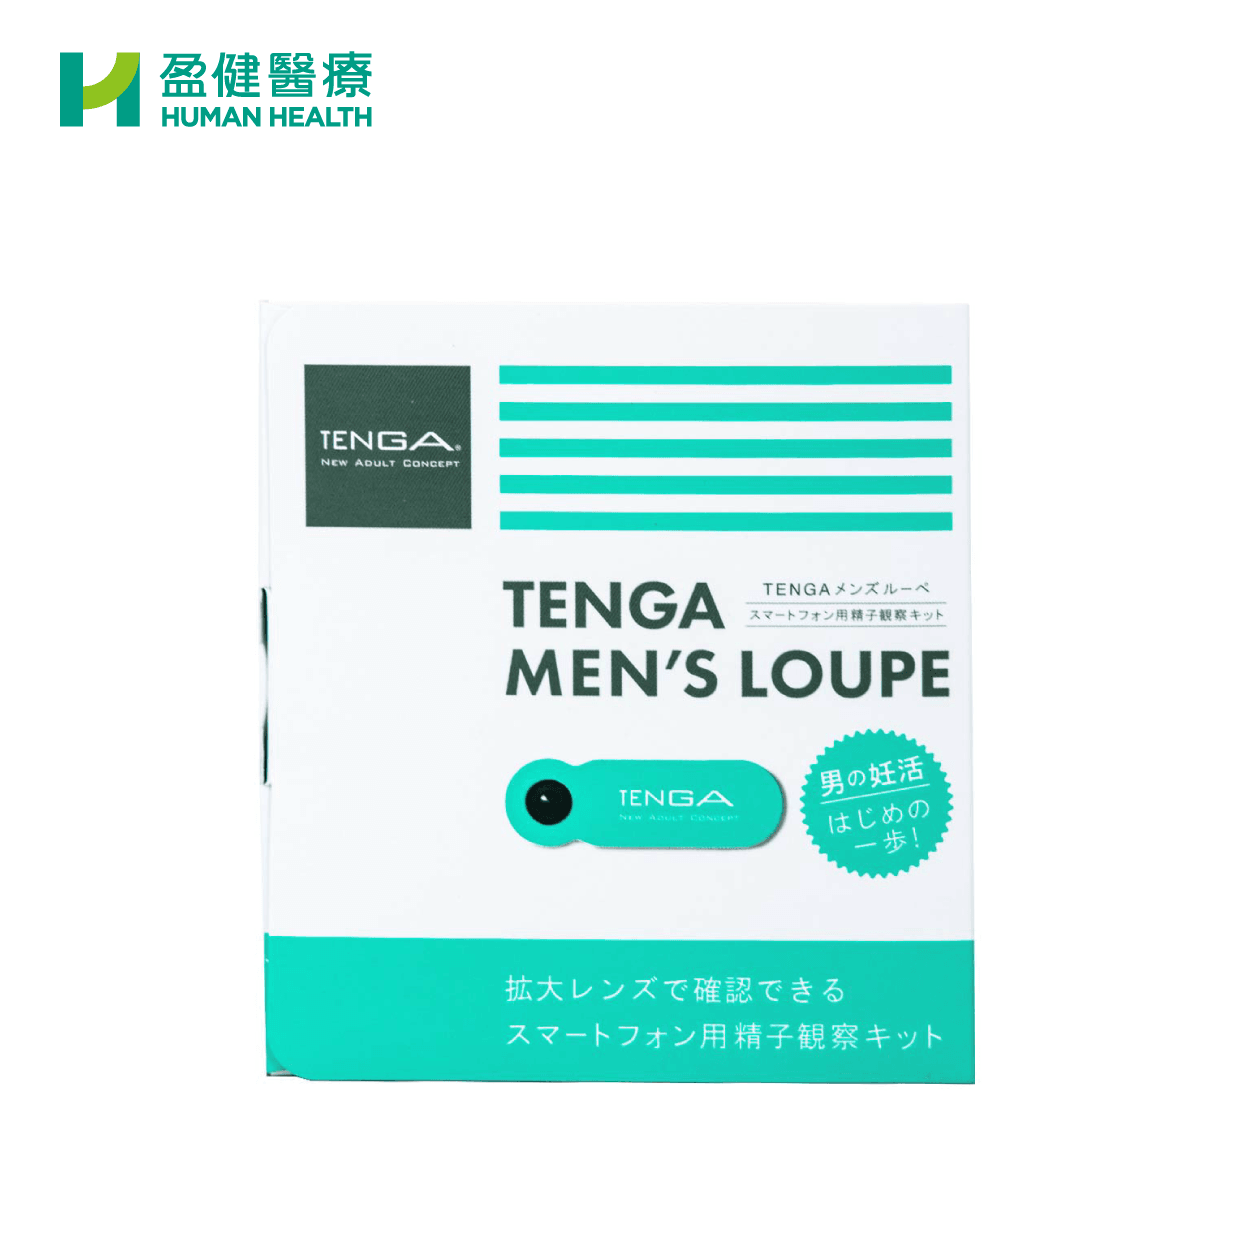 TENGA 男士專用強力放大鏡 (C-TEN001) - 盈健醫療 - 搜羅不同類型健康產品及服務 為您的健康增值